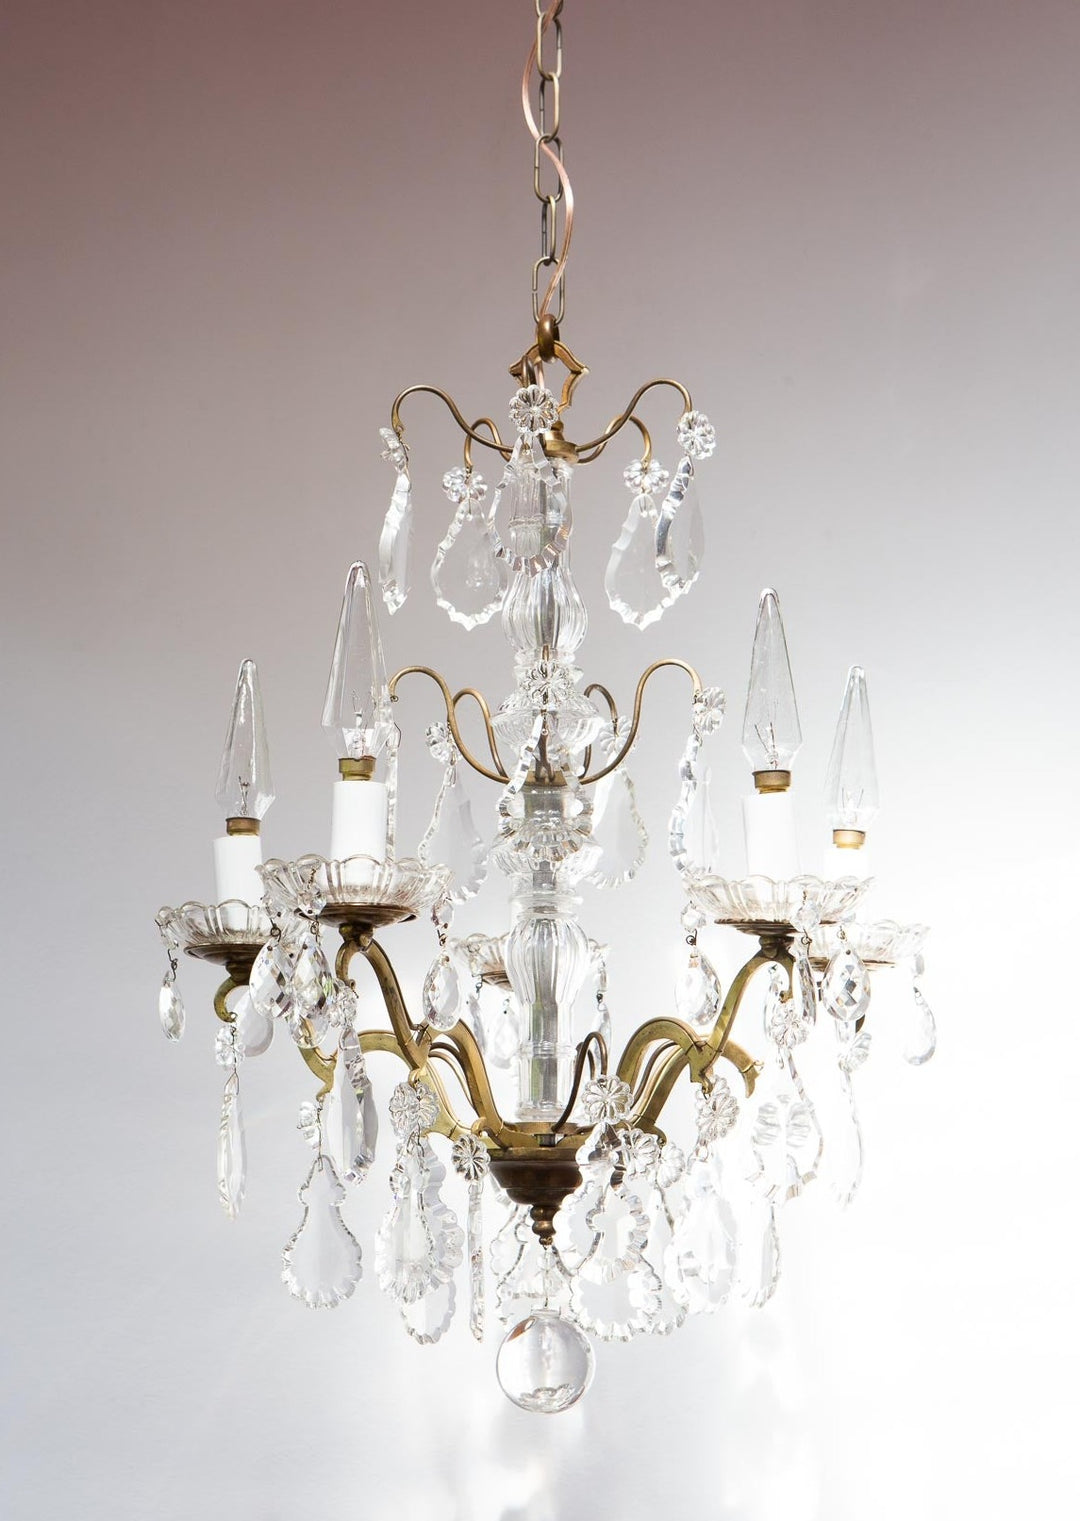 Antigua lámpara de araña francesa cristales